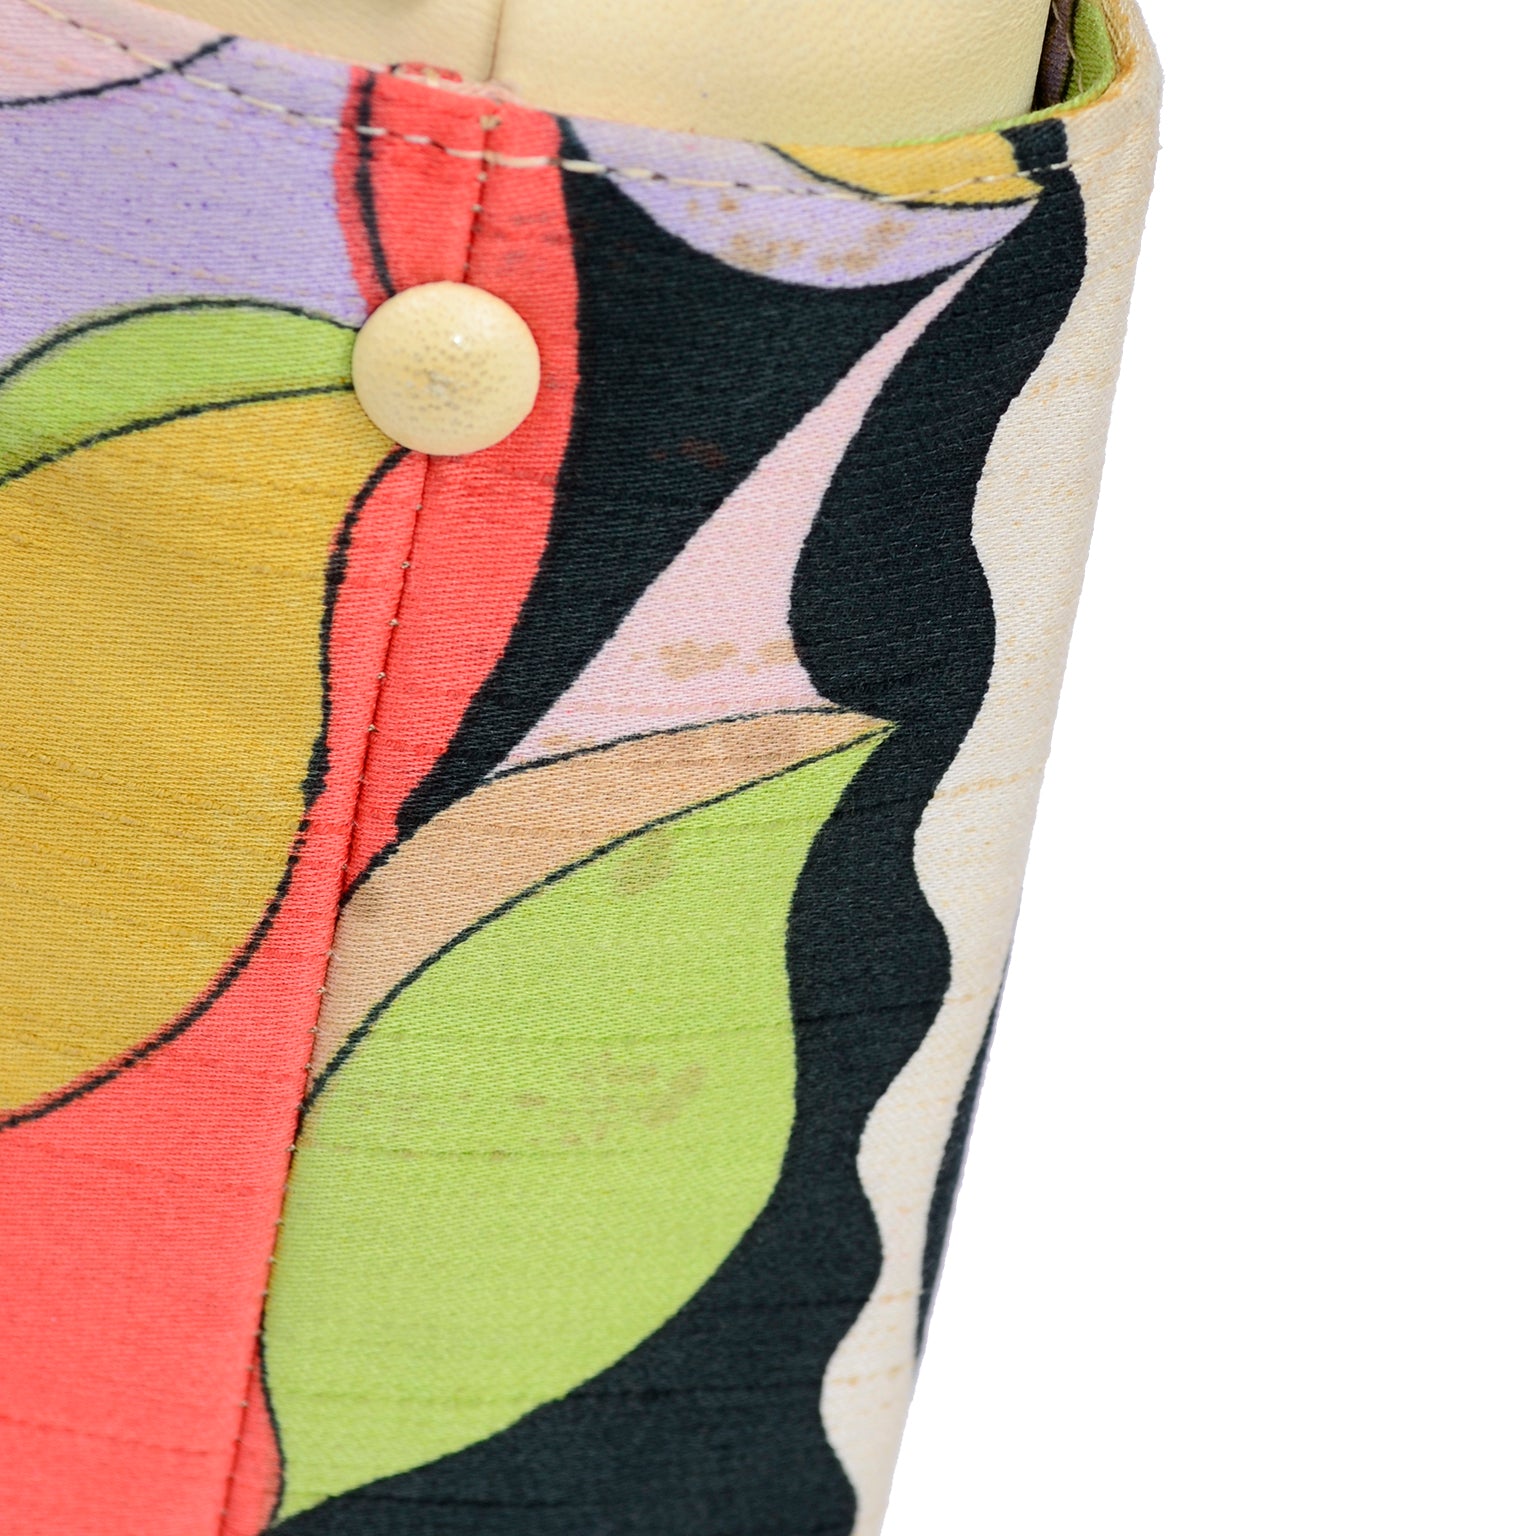 1960s Emilio Pucci for Jana Printed Velvet & Leather Top Handle Bag –  Shrimpton Couture